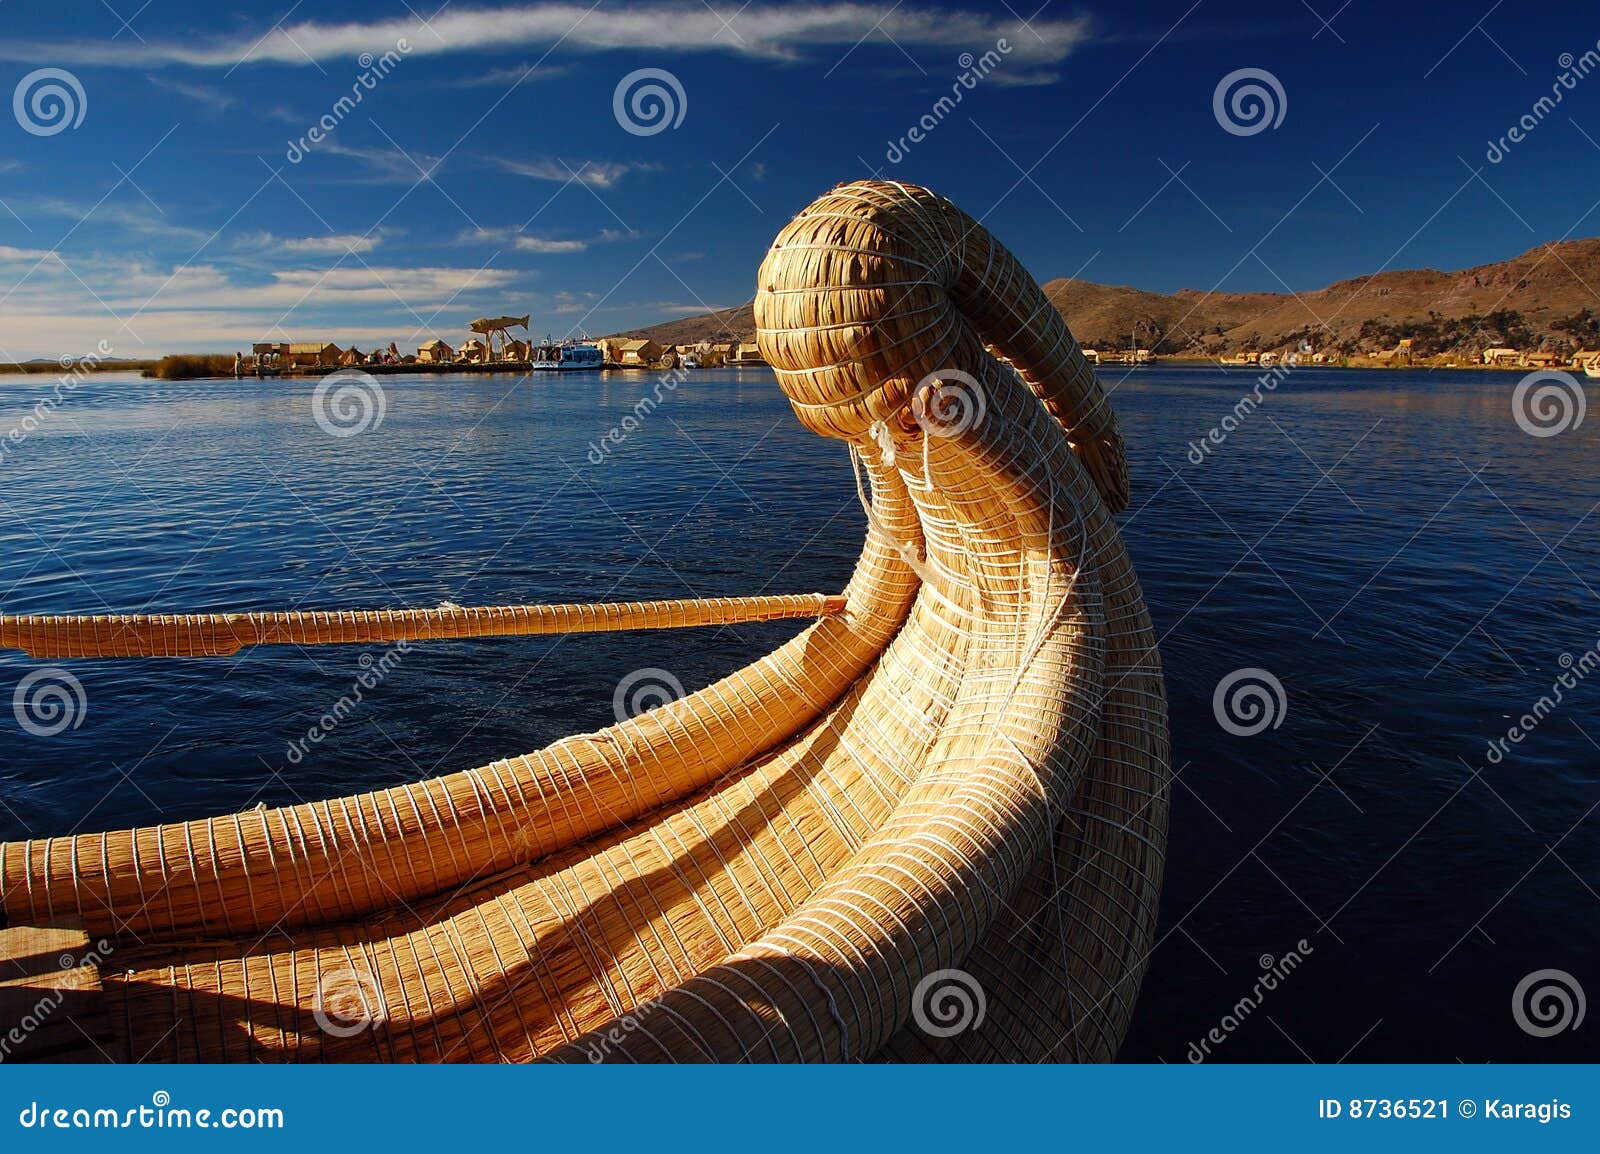 reed boat, lake titicaca